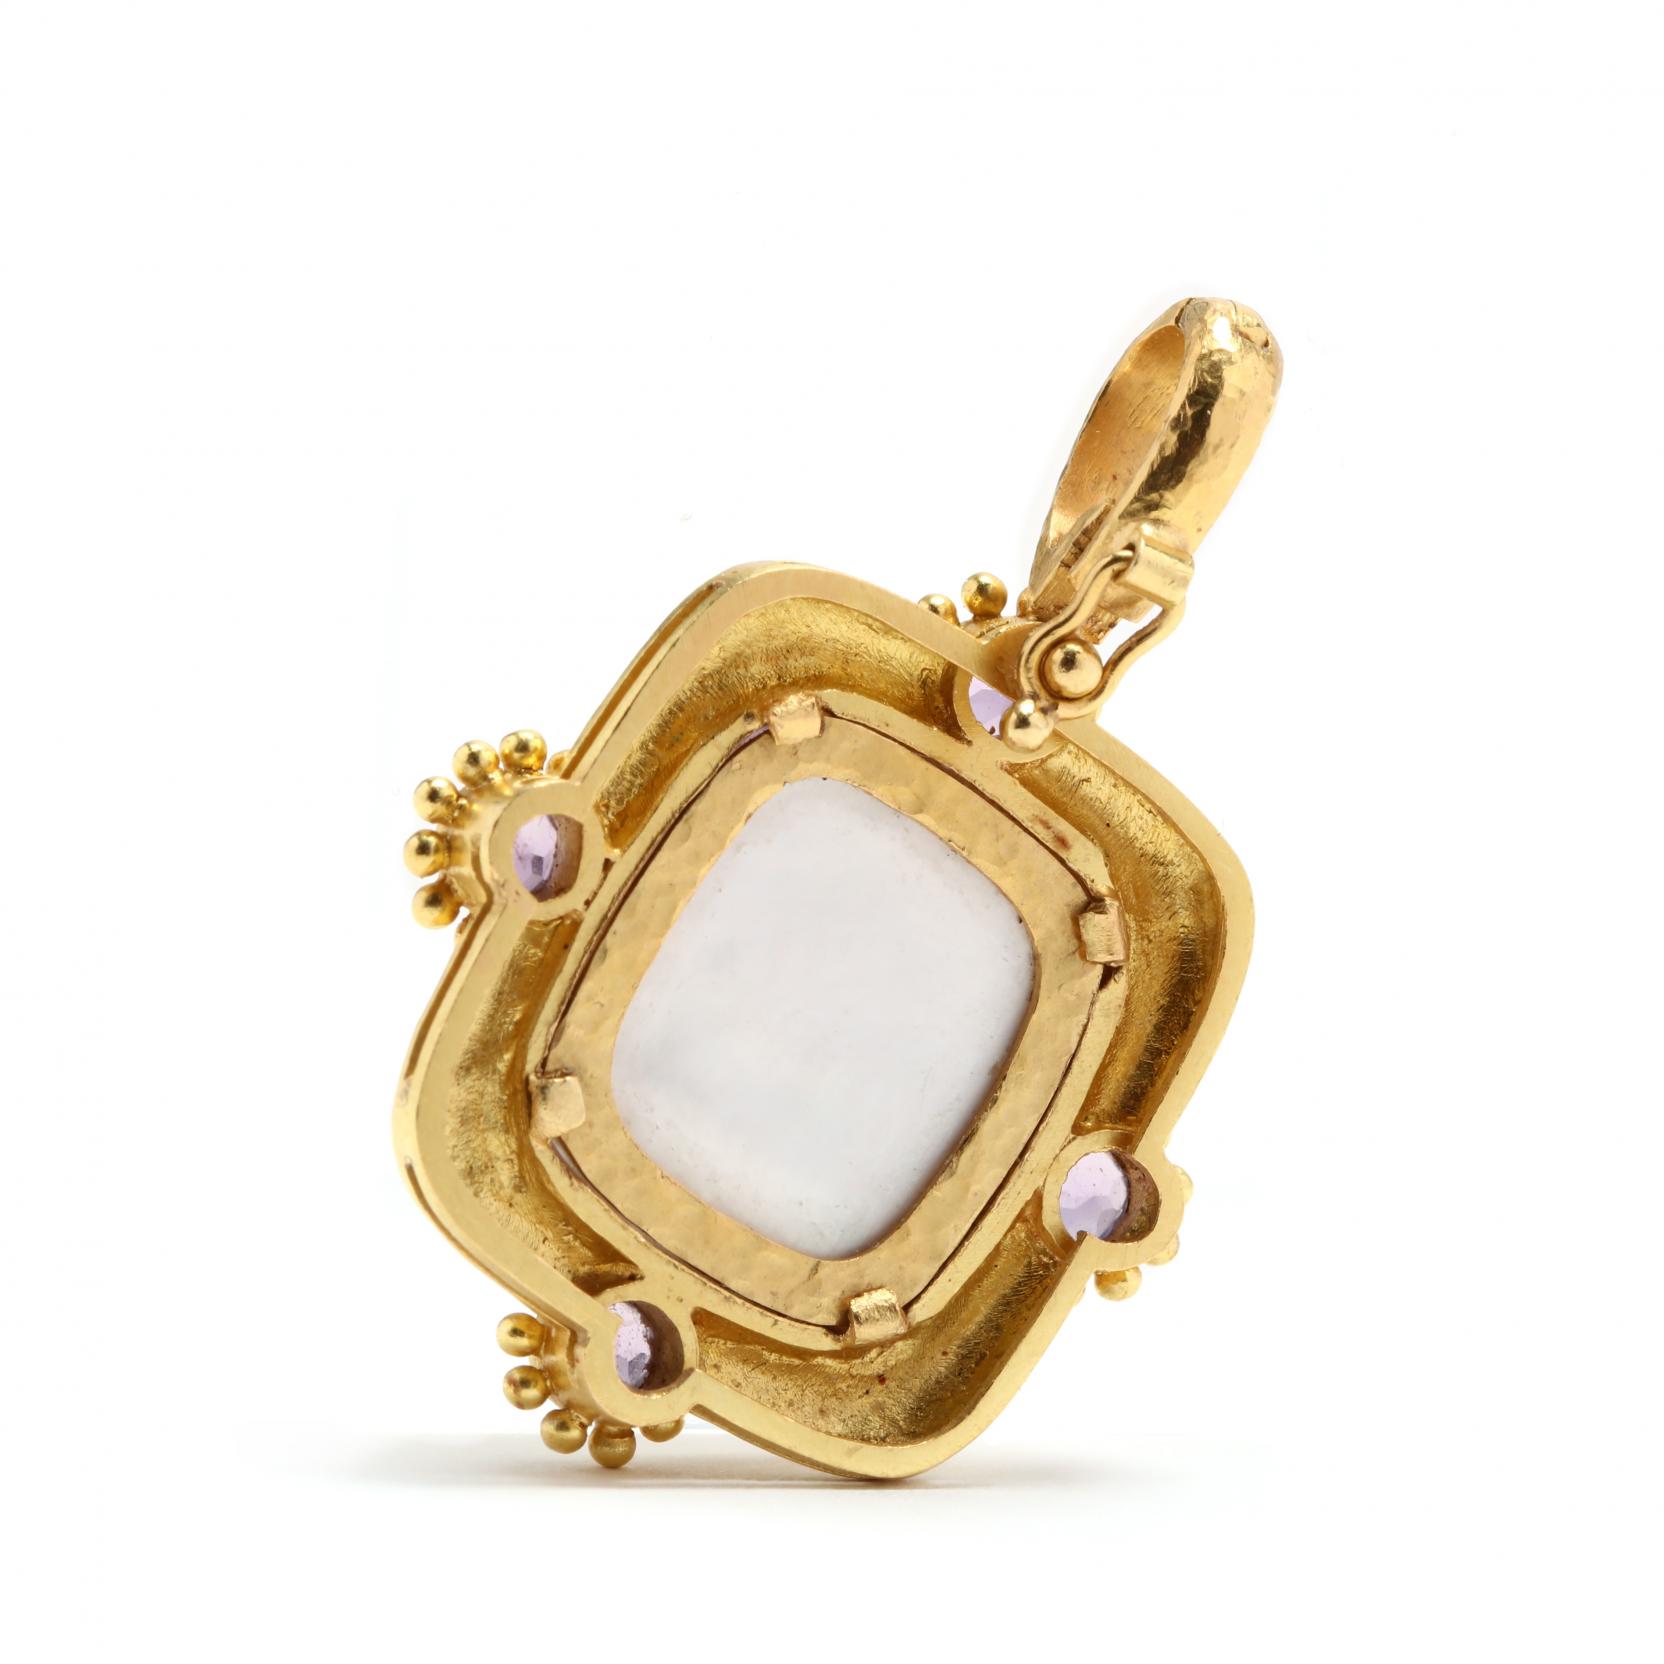 19KT Gold, Venetian Glass, and Amethyst Pendant, Elizabeth Locke - Image 2 of 3